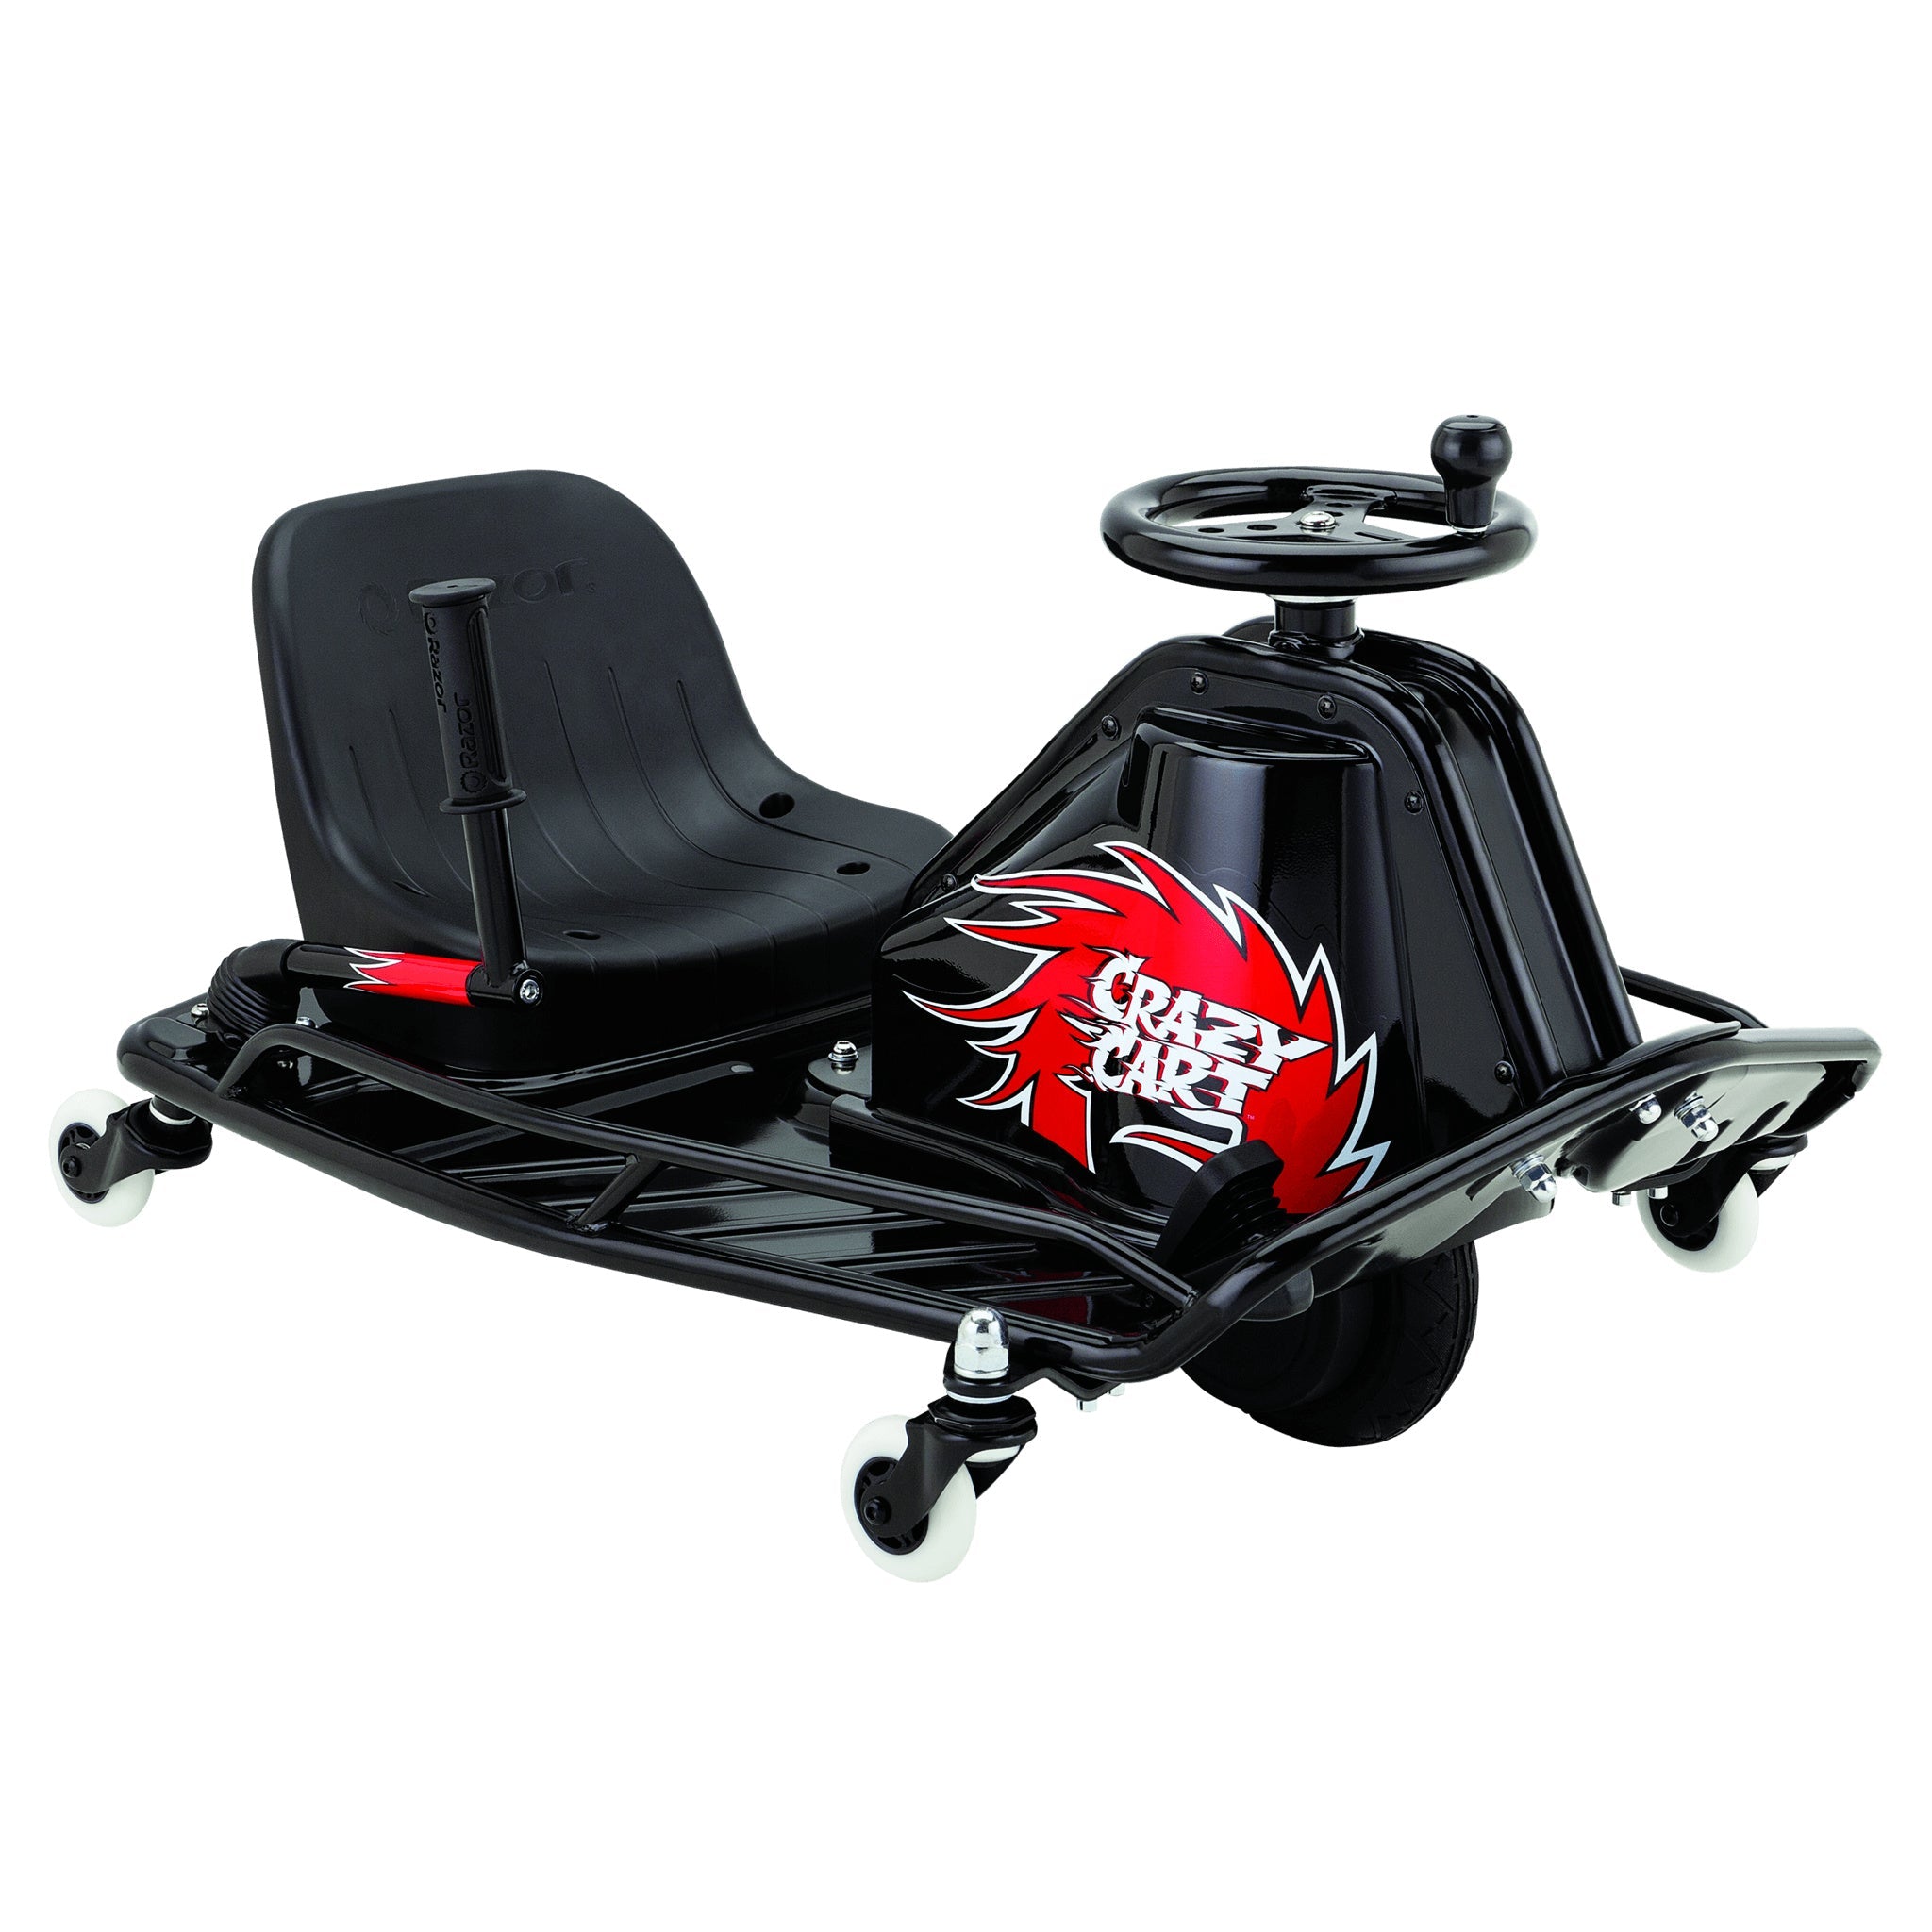 Razor Crazy Cart DLX drifter ride for kids